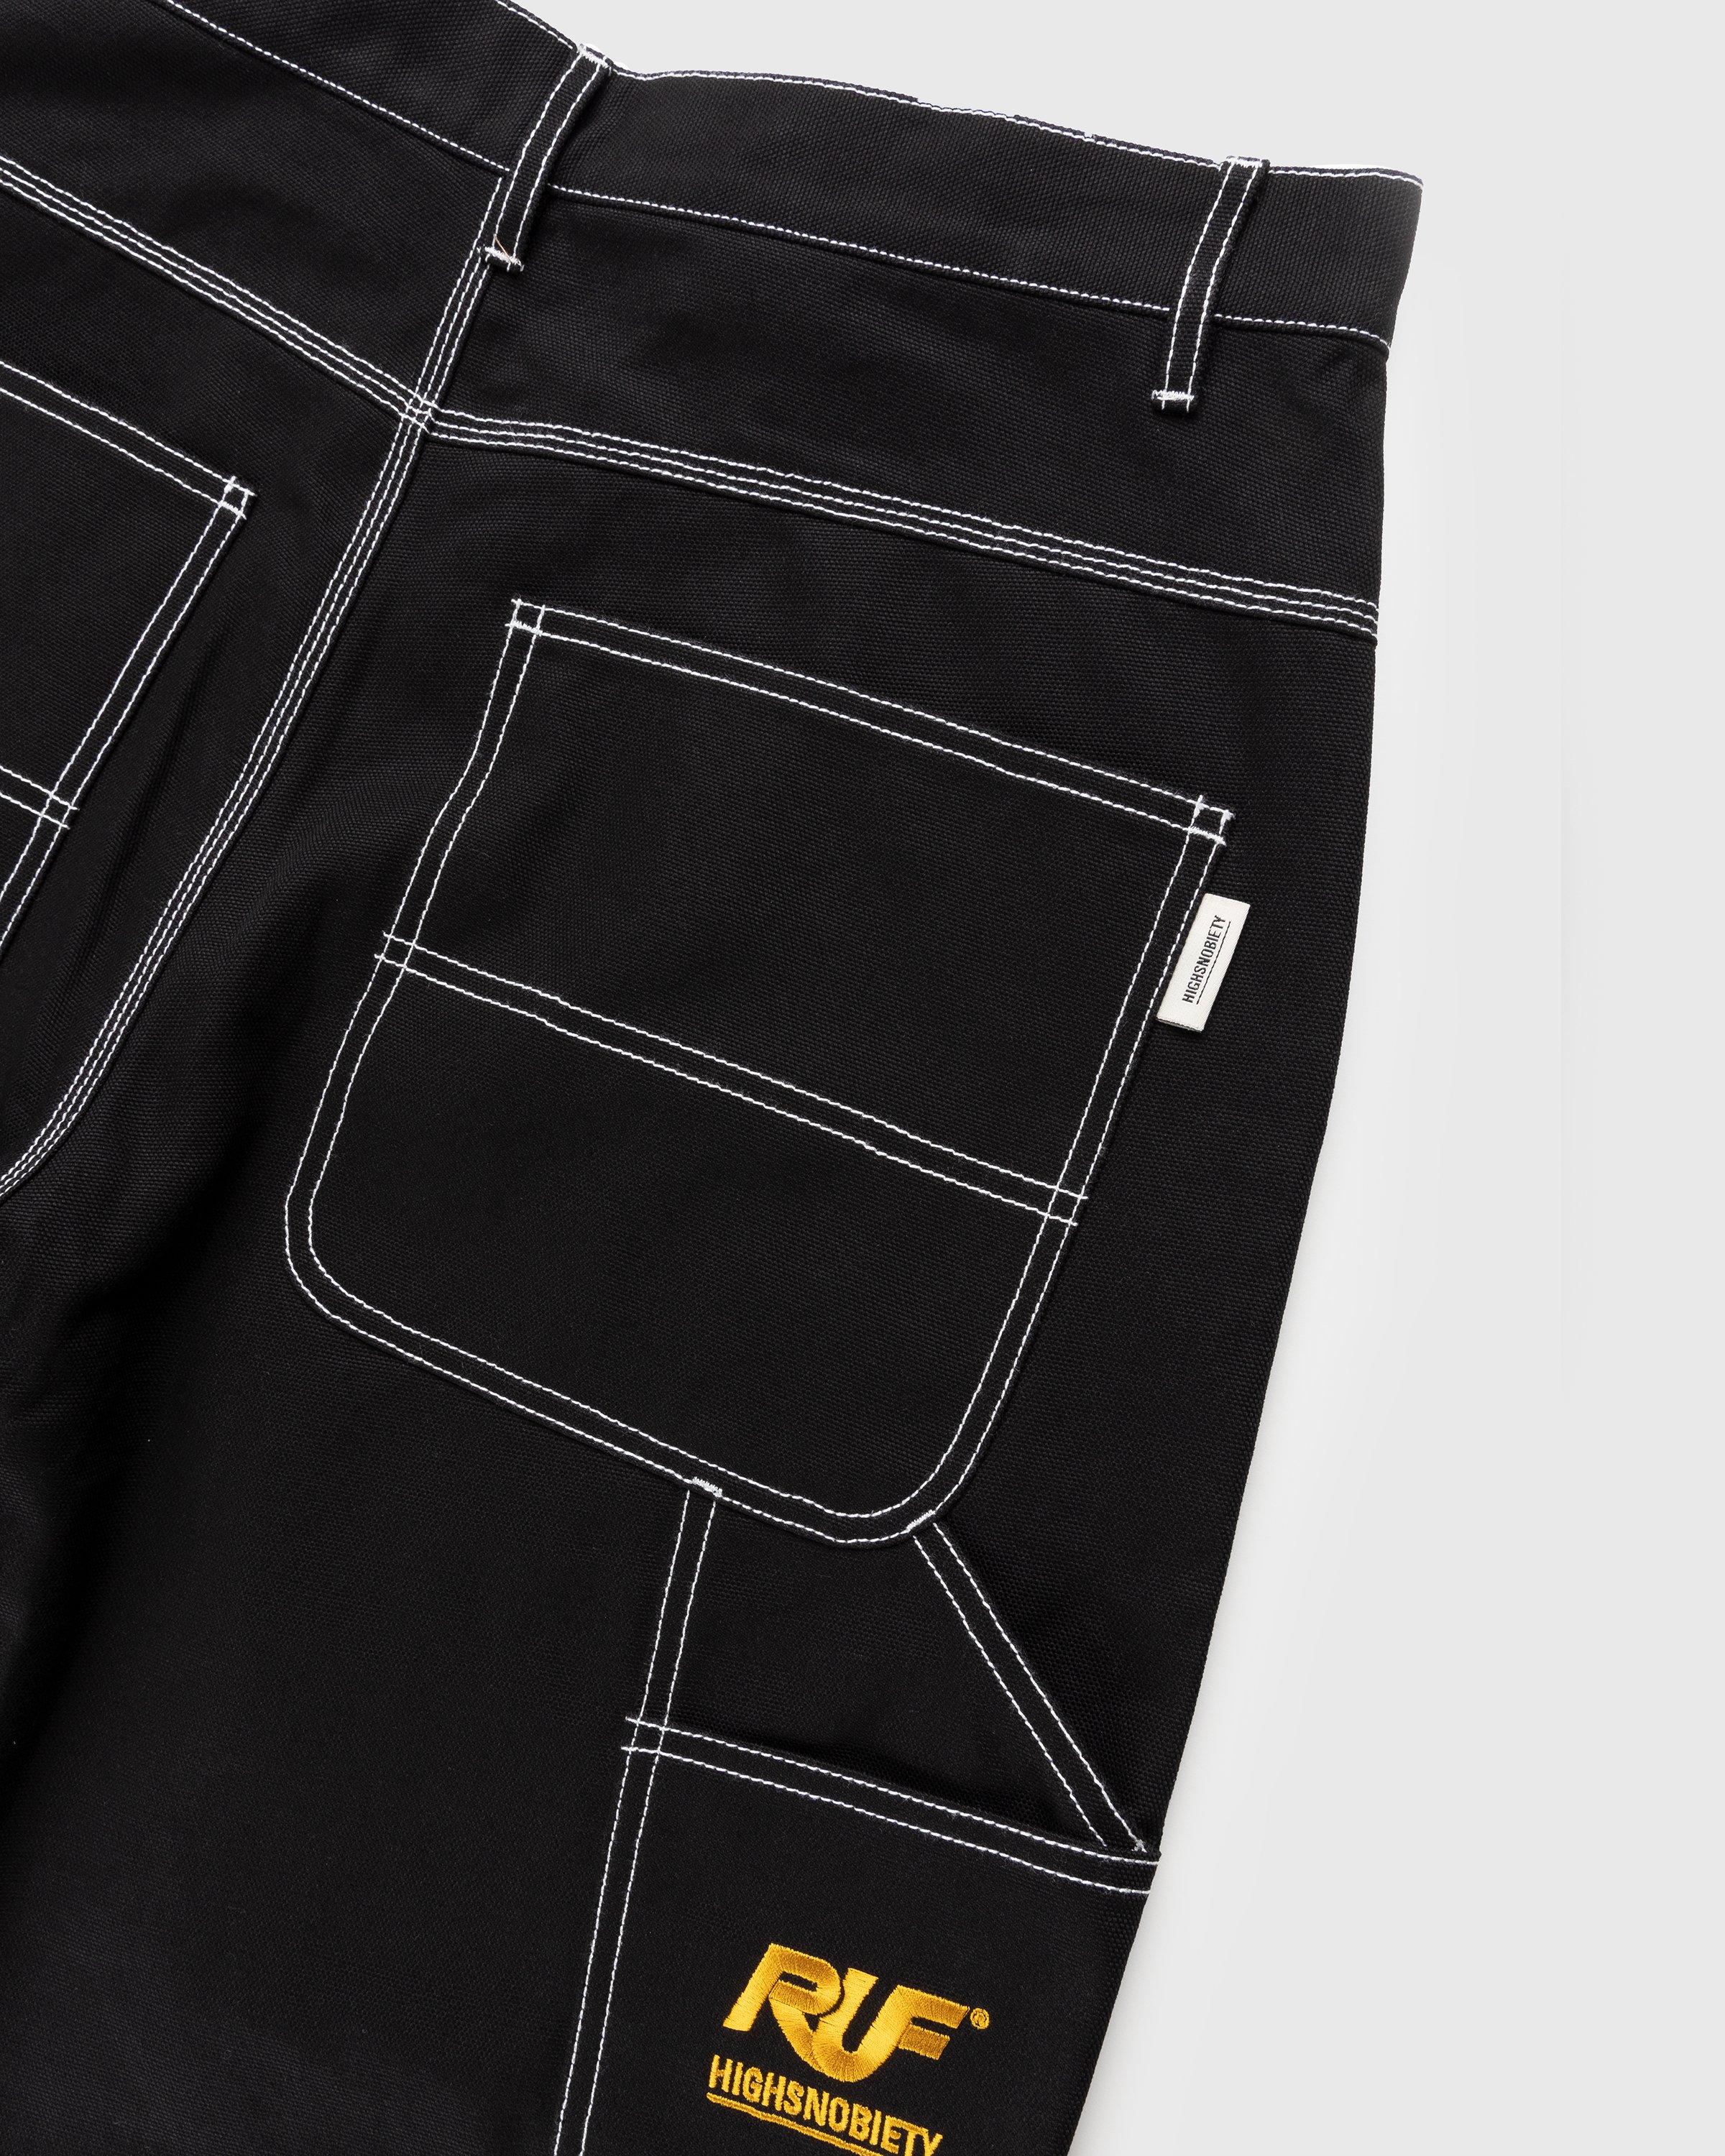 RUF x Highsnobiety - Cotton Work Pants Black - Clothing - Black - Image 4